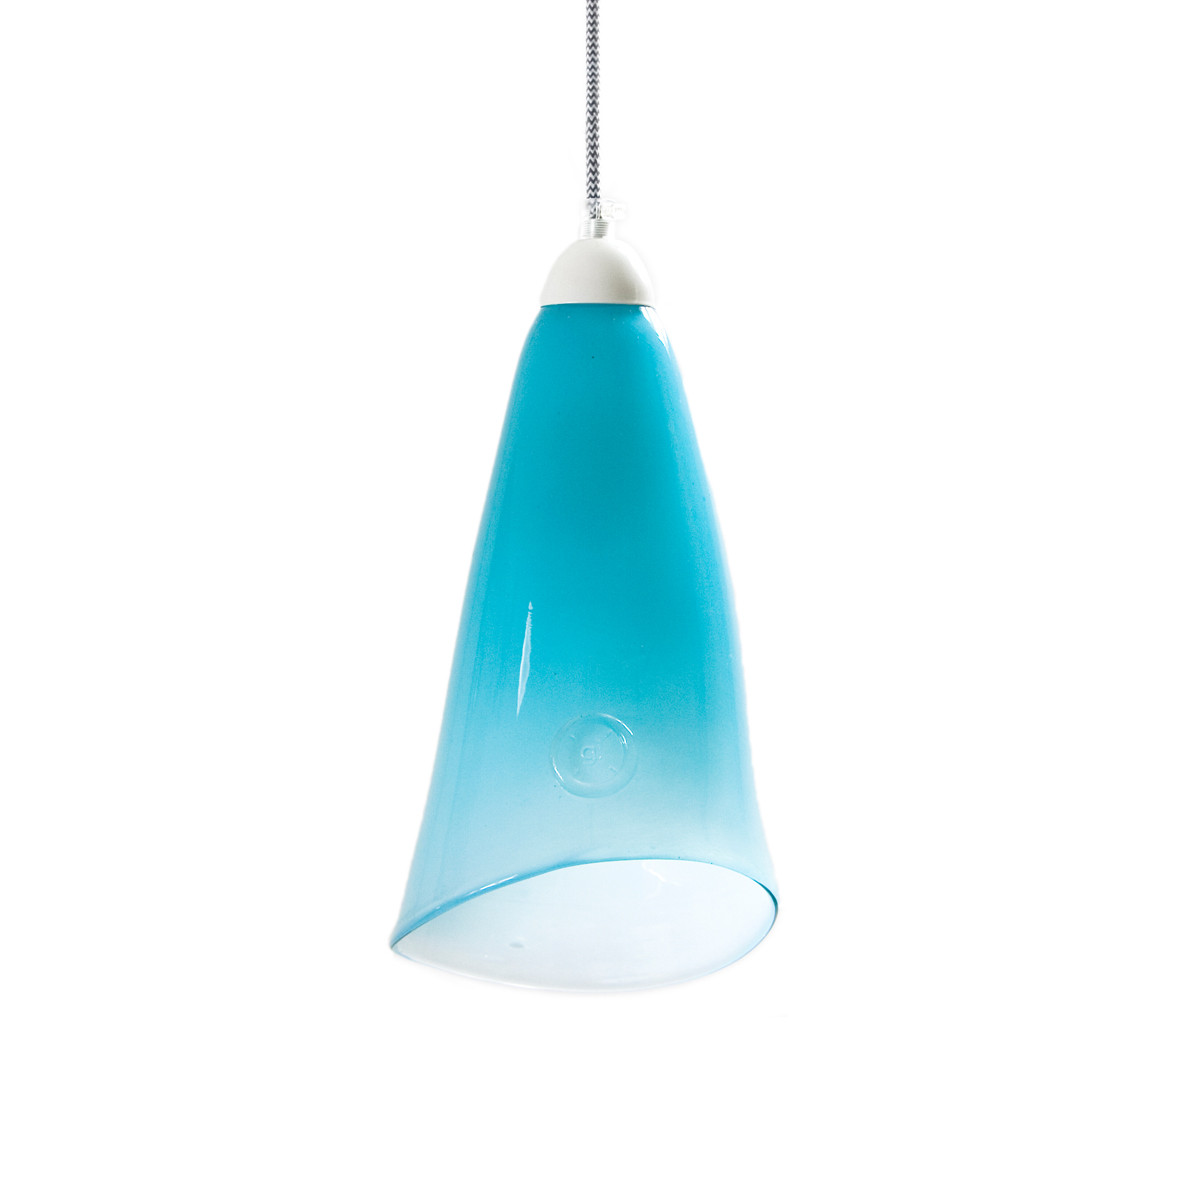 Lampa wisząca szklana HORN pastelowo turkusowa LGH0261 - gie el